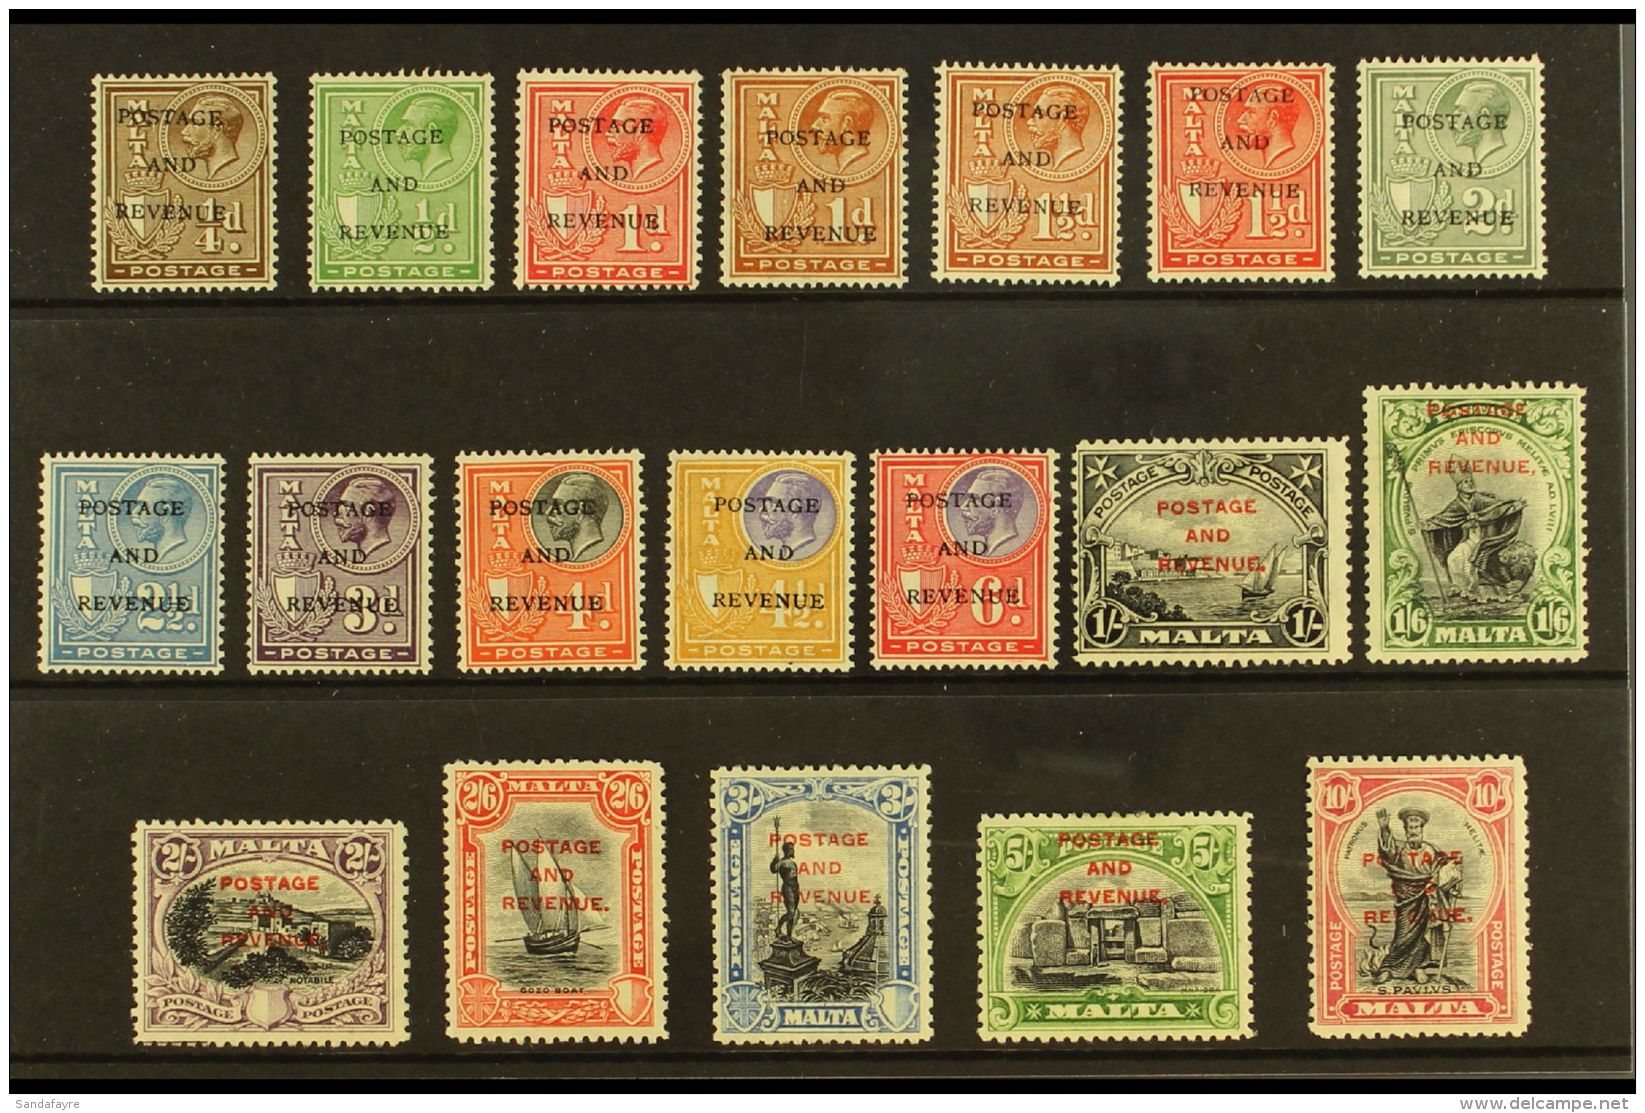 1928  "POSTAGE AND REVENUE" Overprints Complete Definitive Set, SG 174/192, Fine Mint. (19 Stamps) For More... - Malta (...-1964)